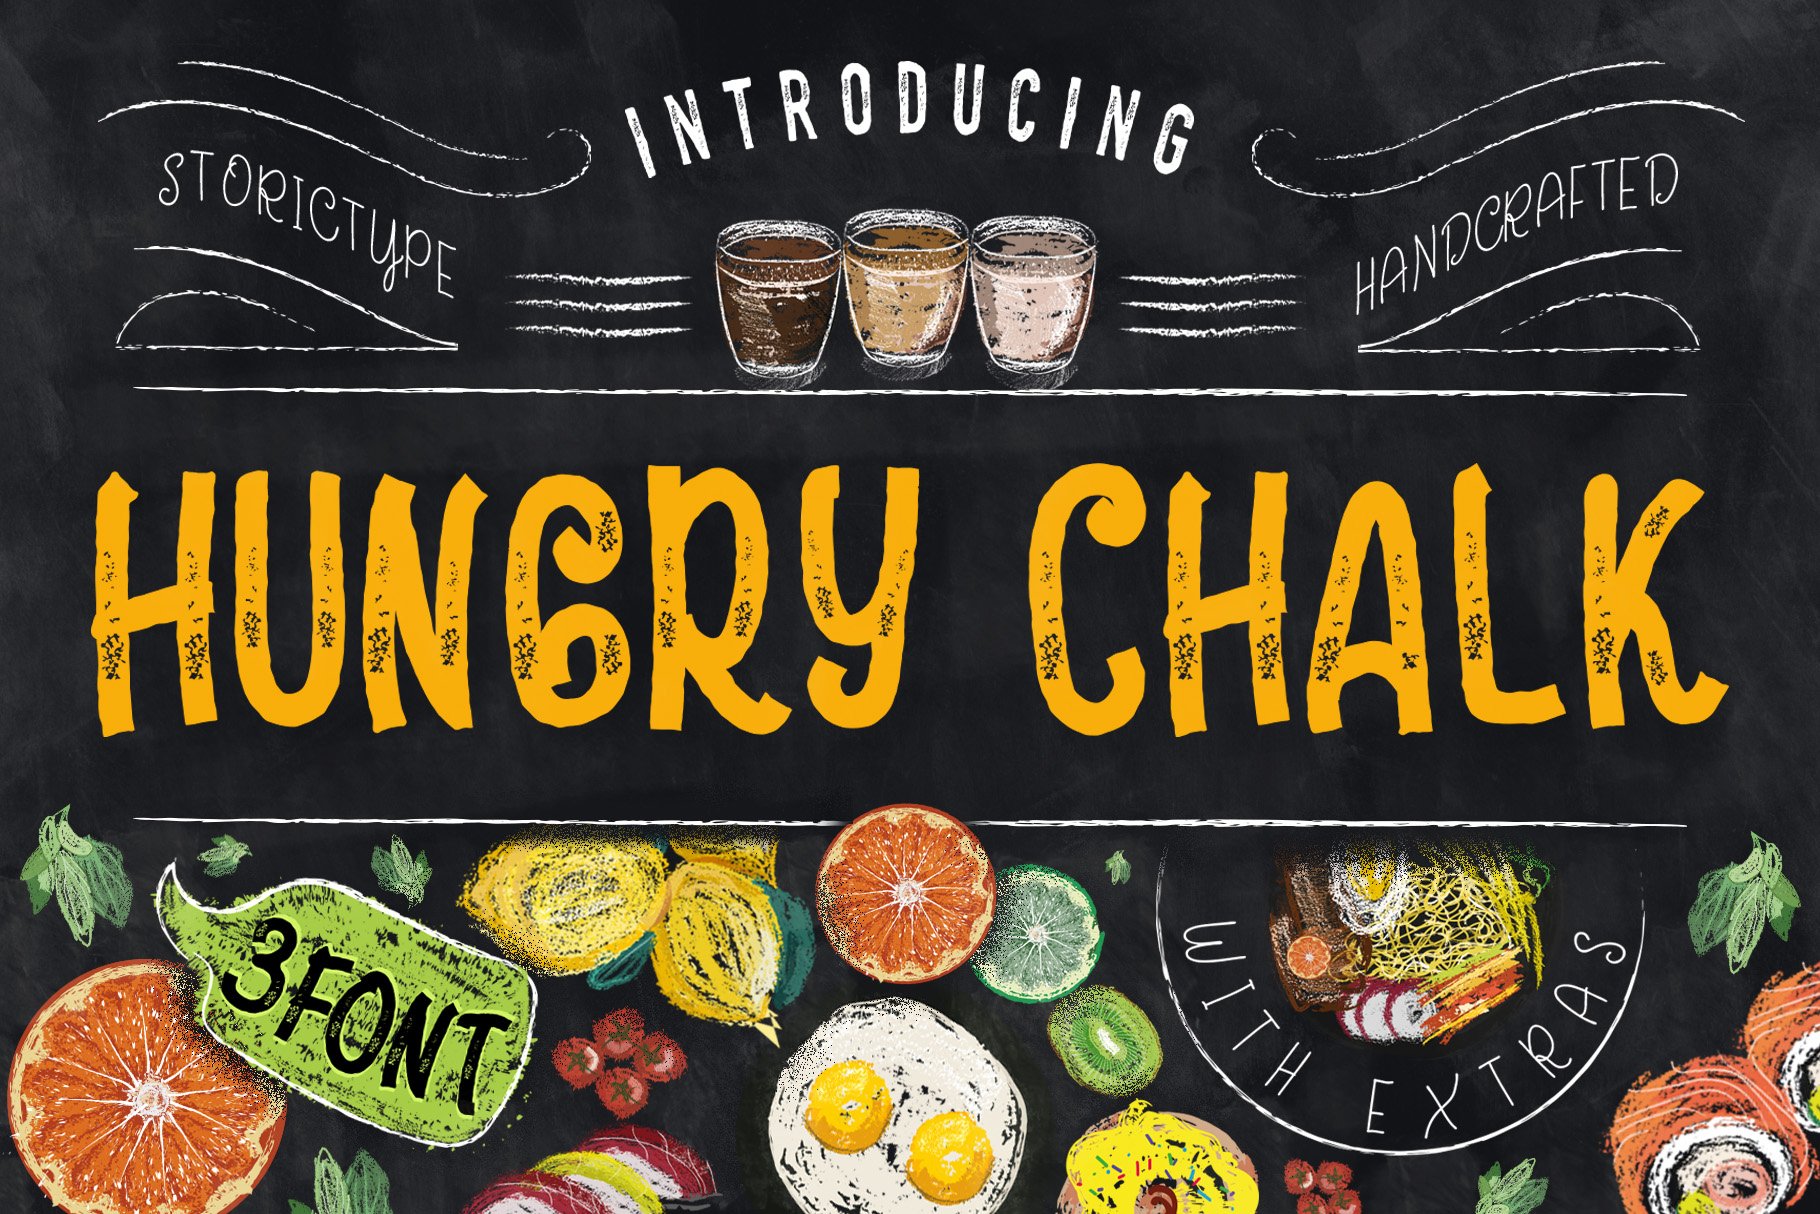 HungryChalk Typeface cover image.